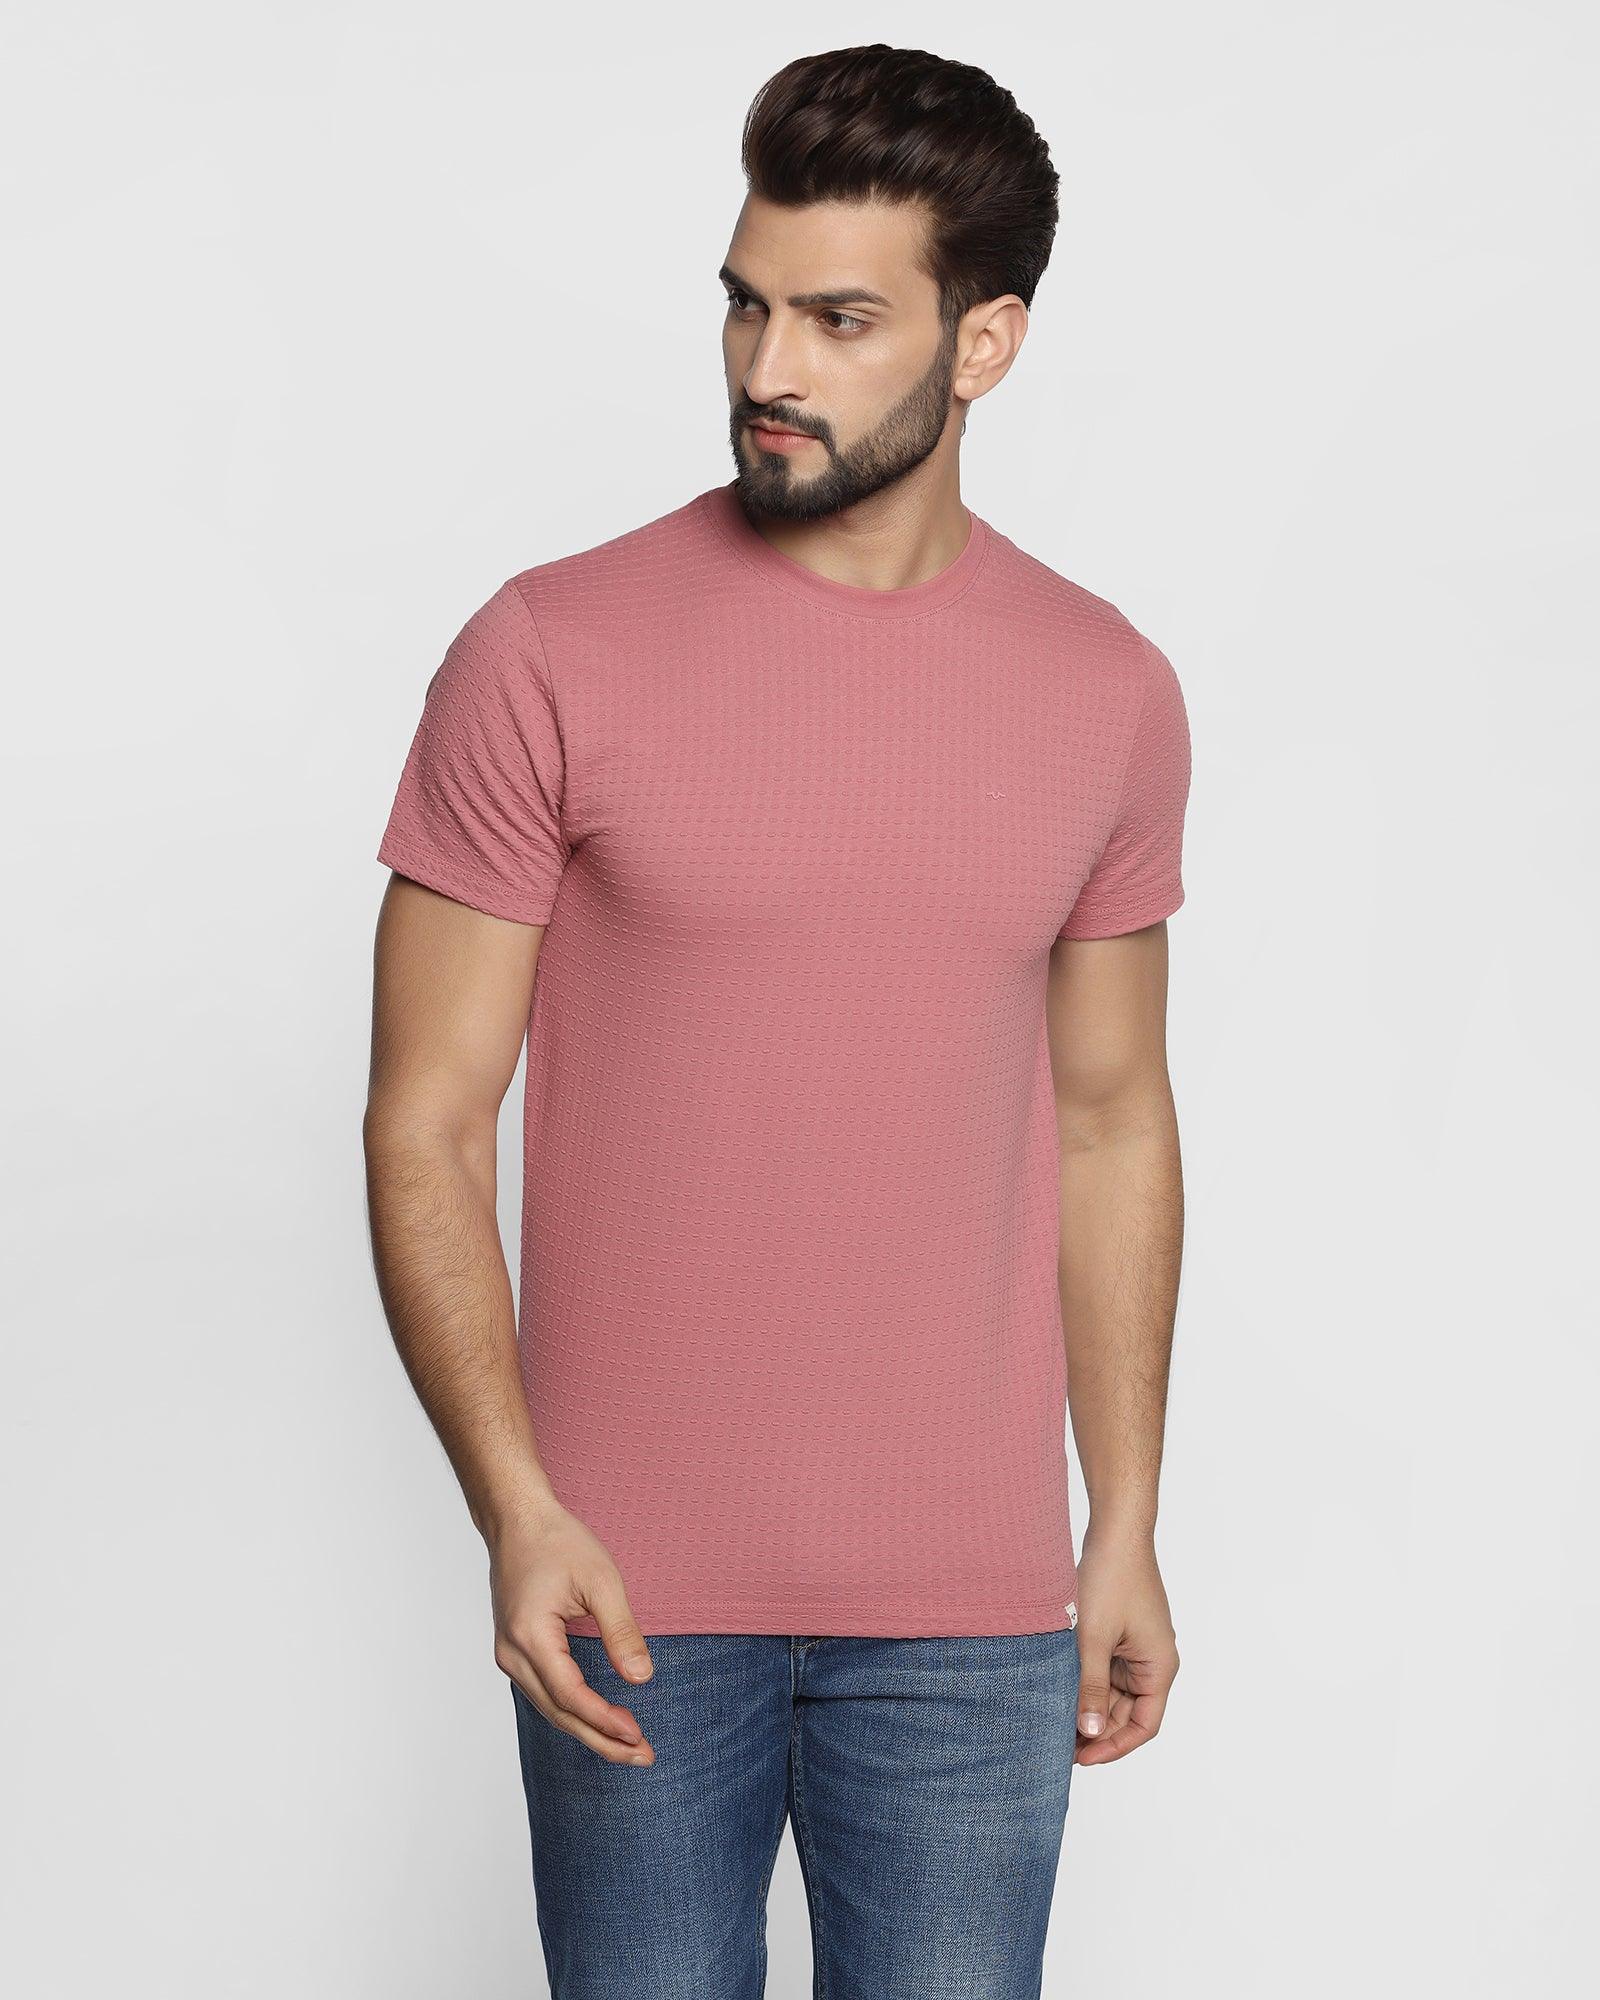 Crew Neck Dusty Pink Solid T Shirt - Sheath